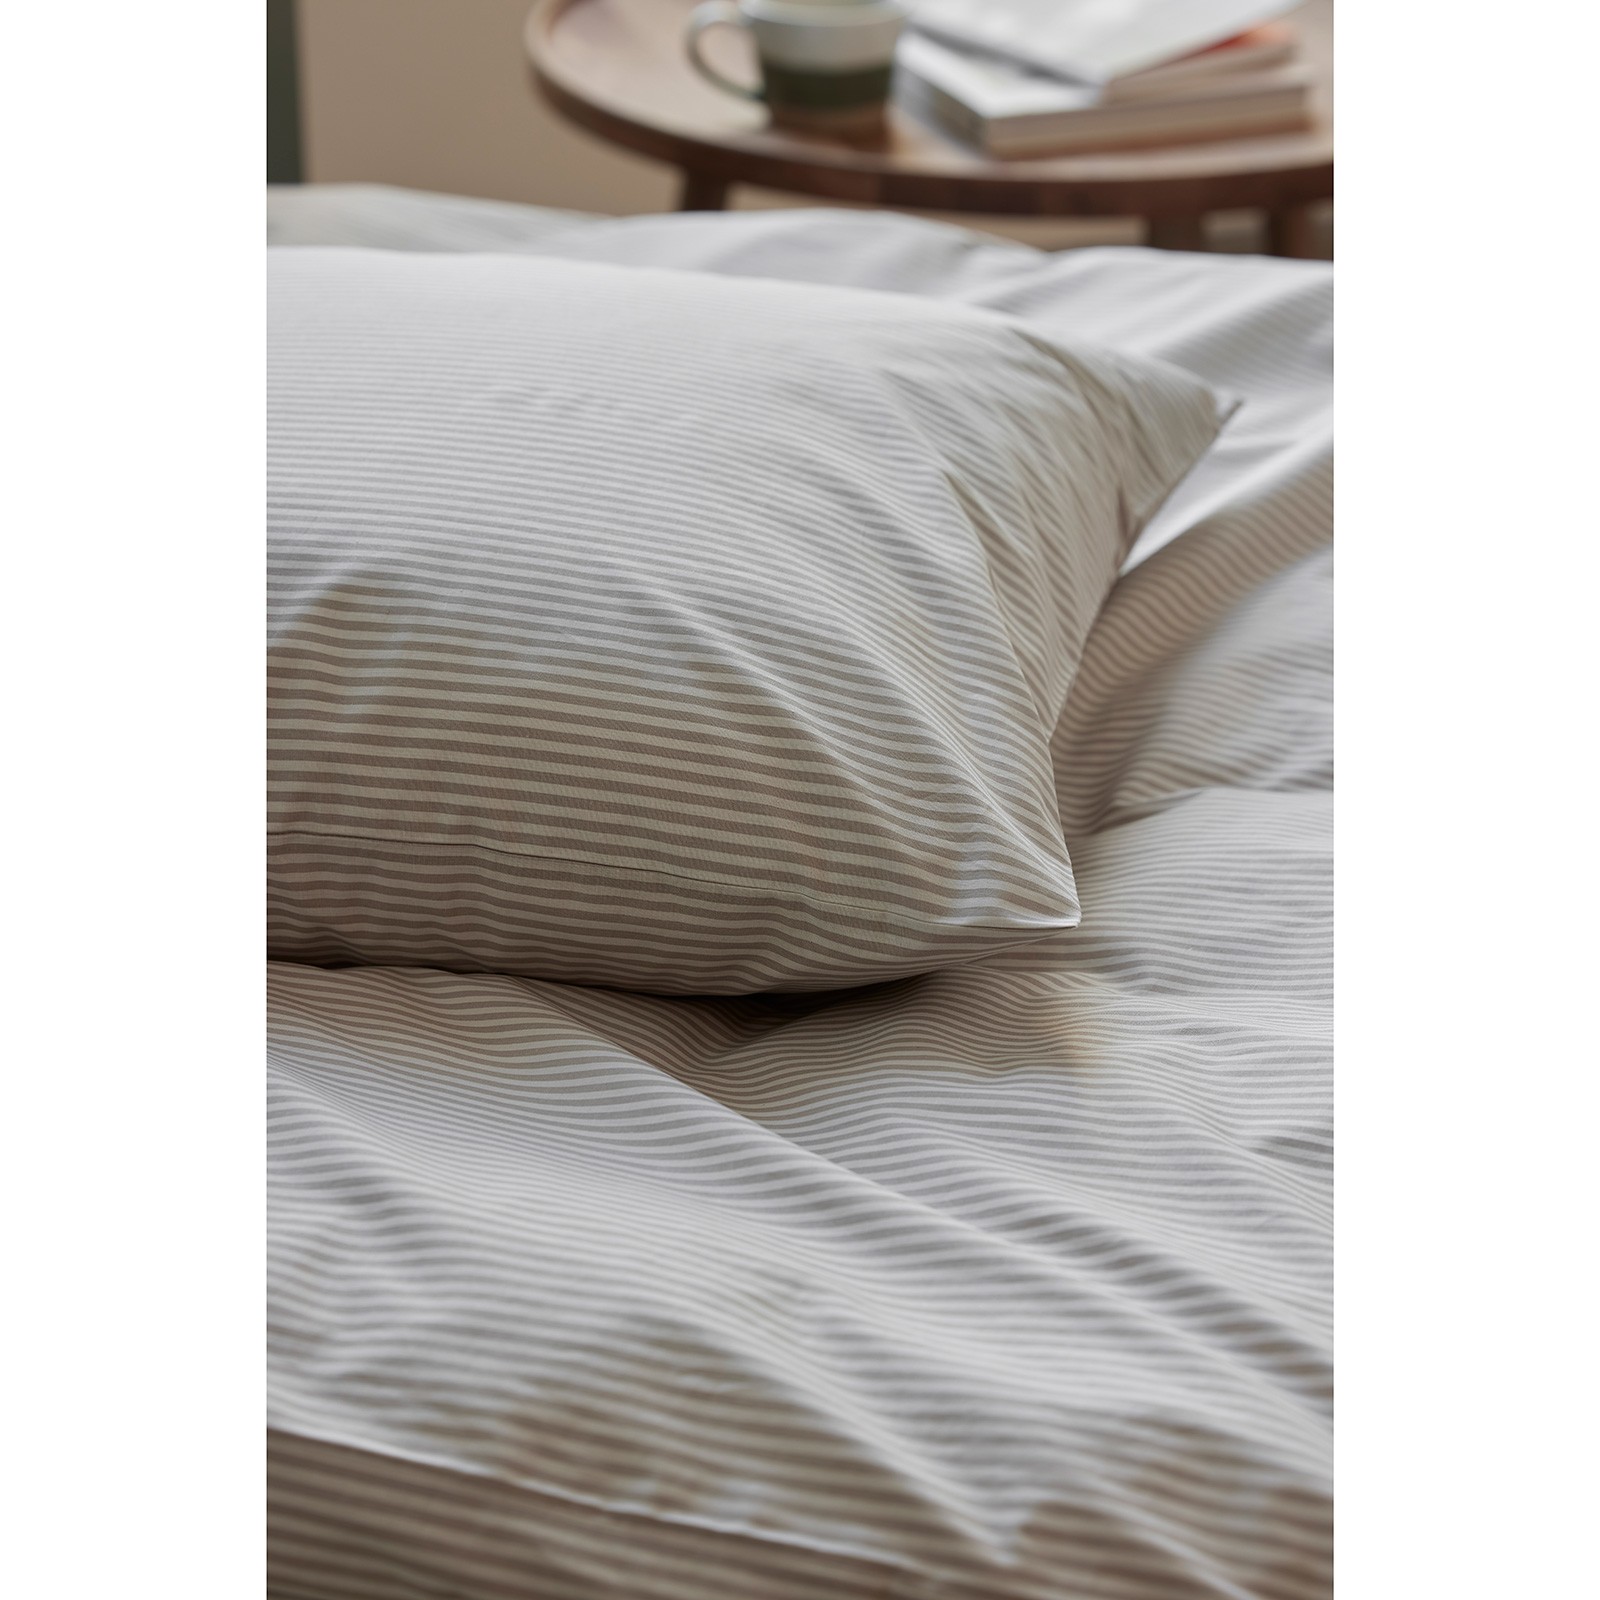 Södahl Classic Stripe sengetøj 140x220cm Taupe 2sæt